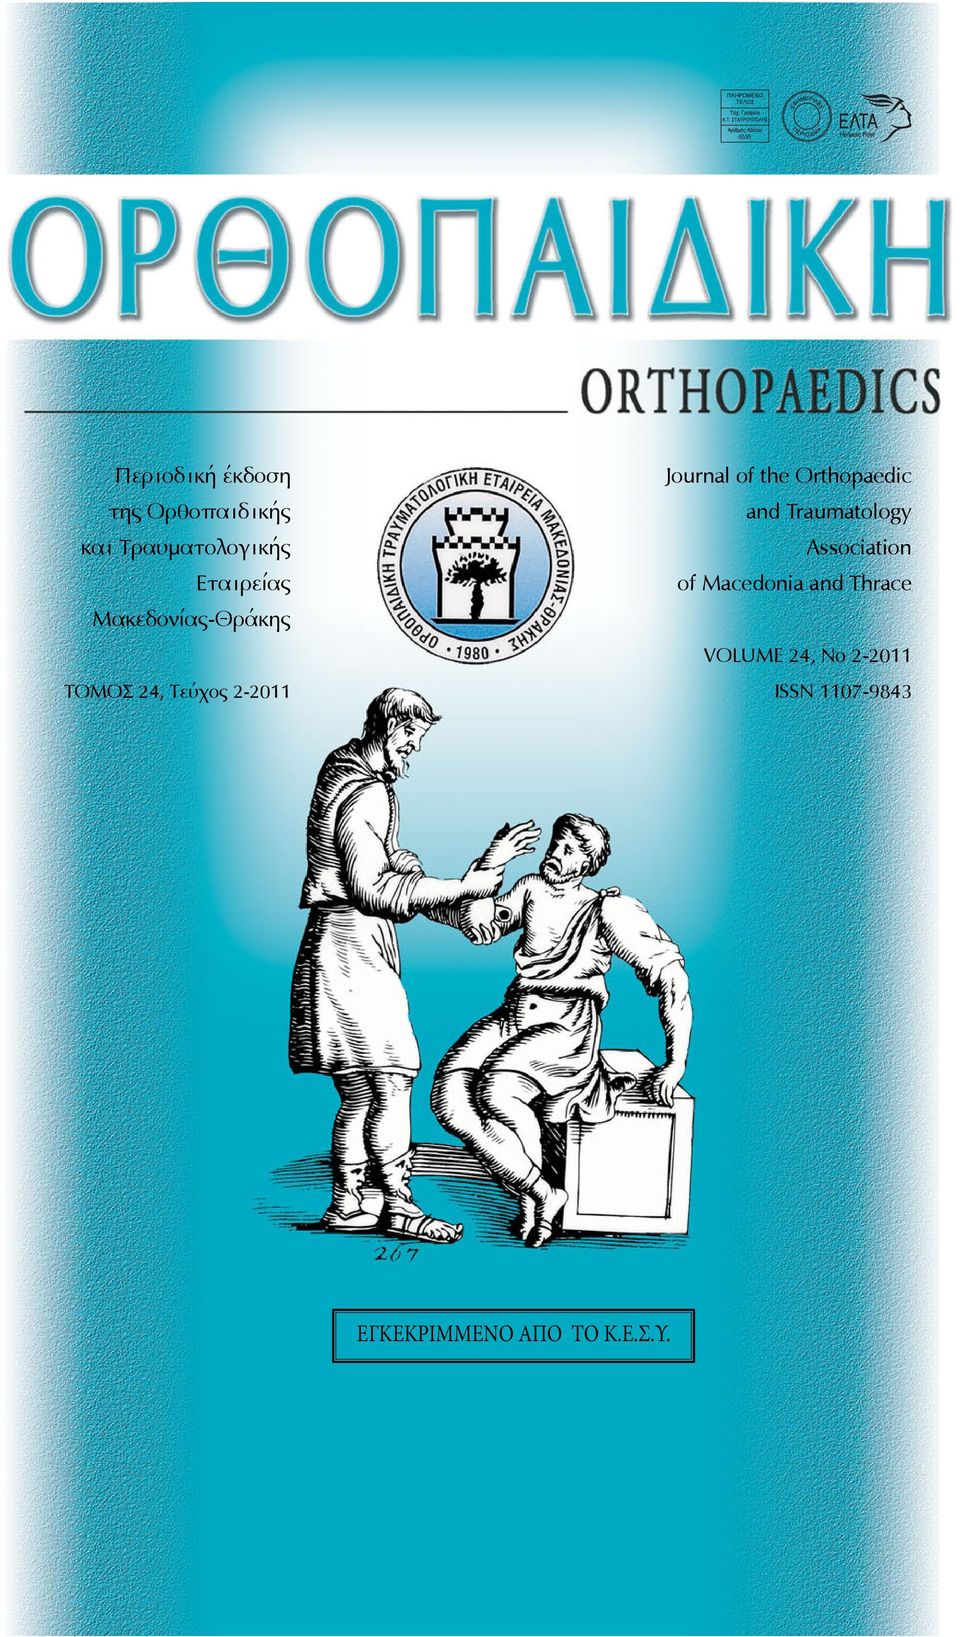 the Orthopaedic and Traumatology Association of Macedonia and